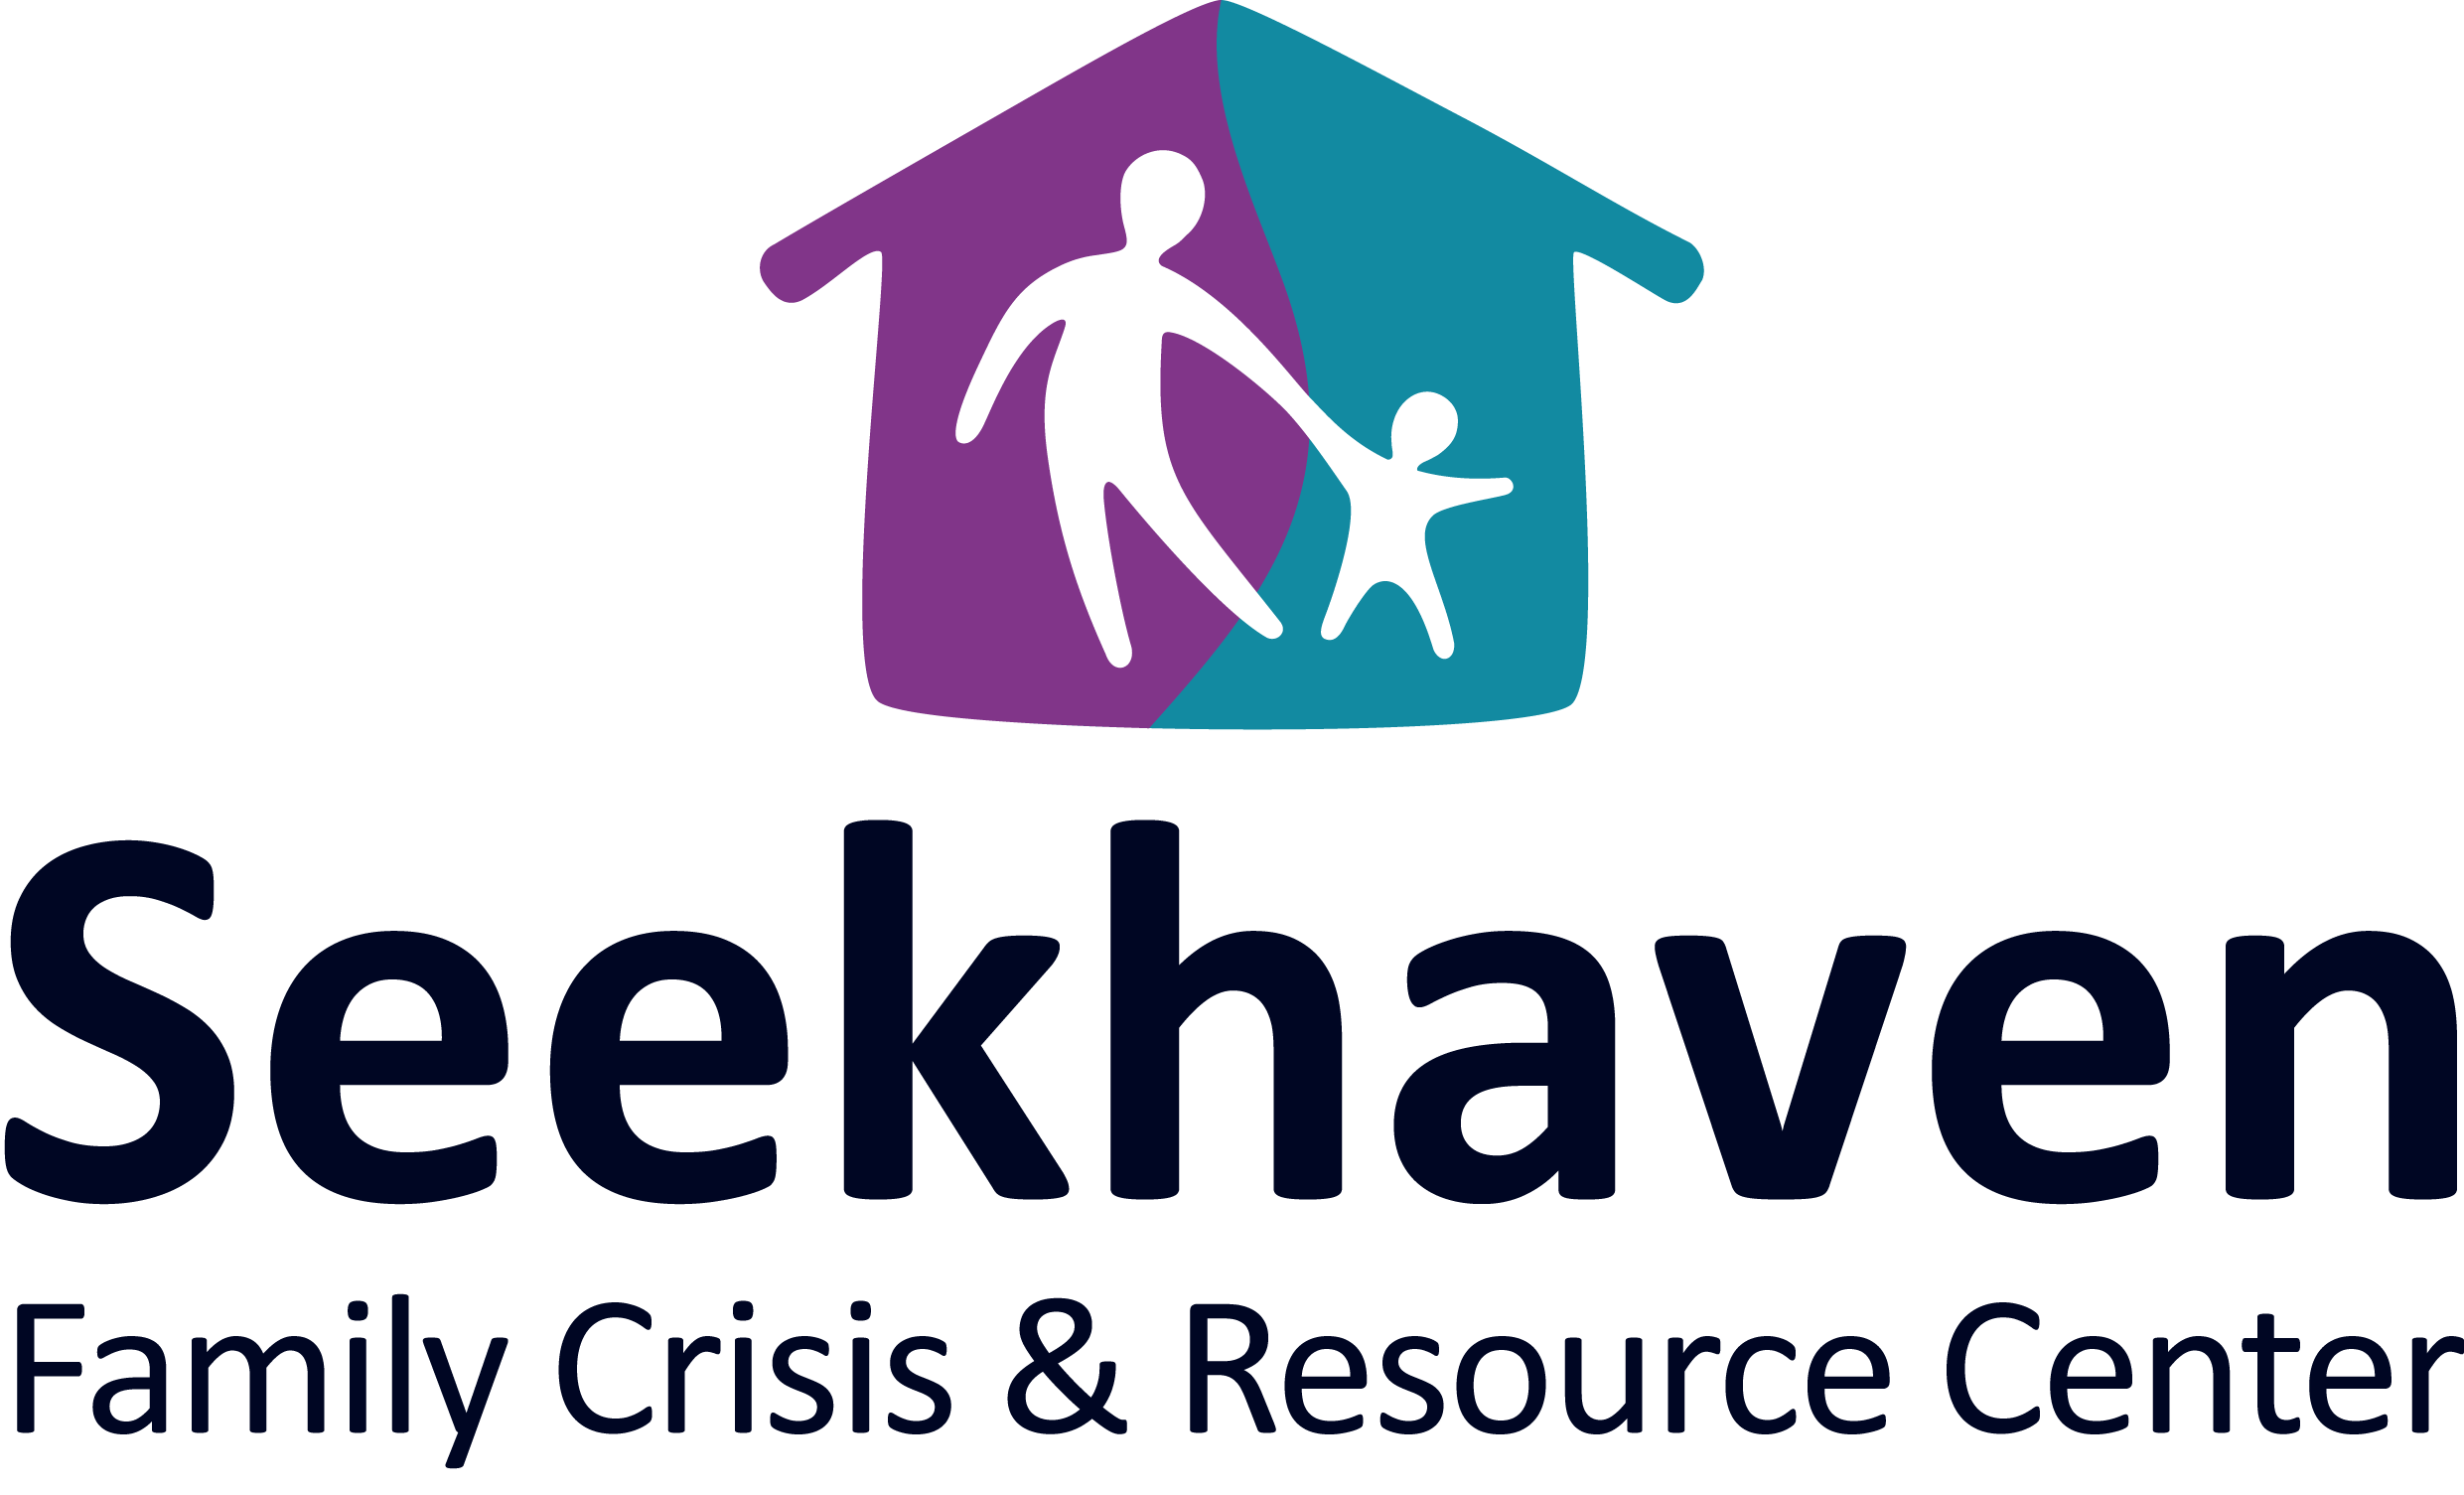 Seekhaven Family Crisis & Resource Center